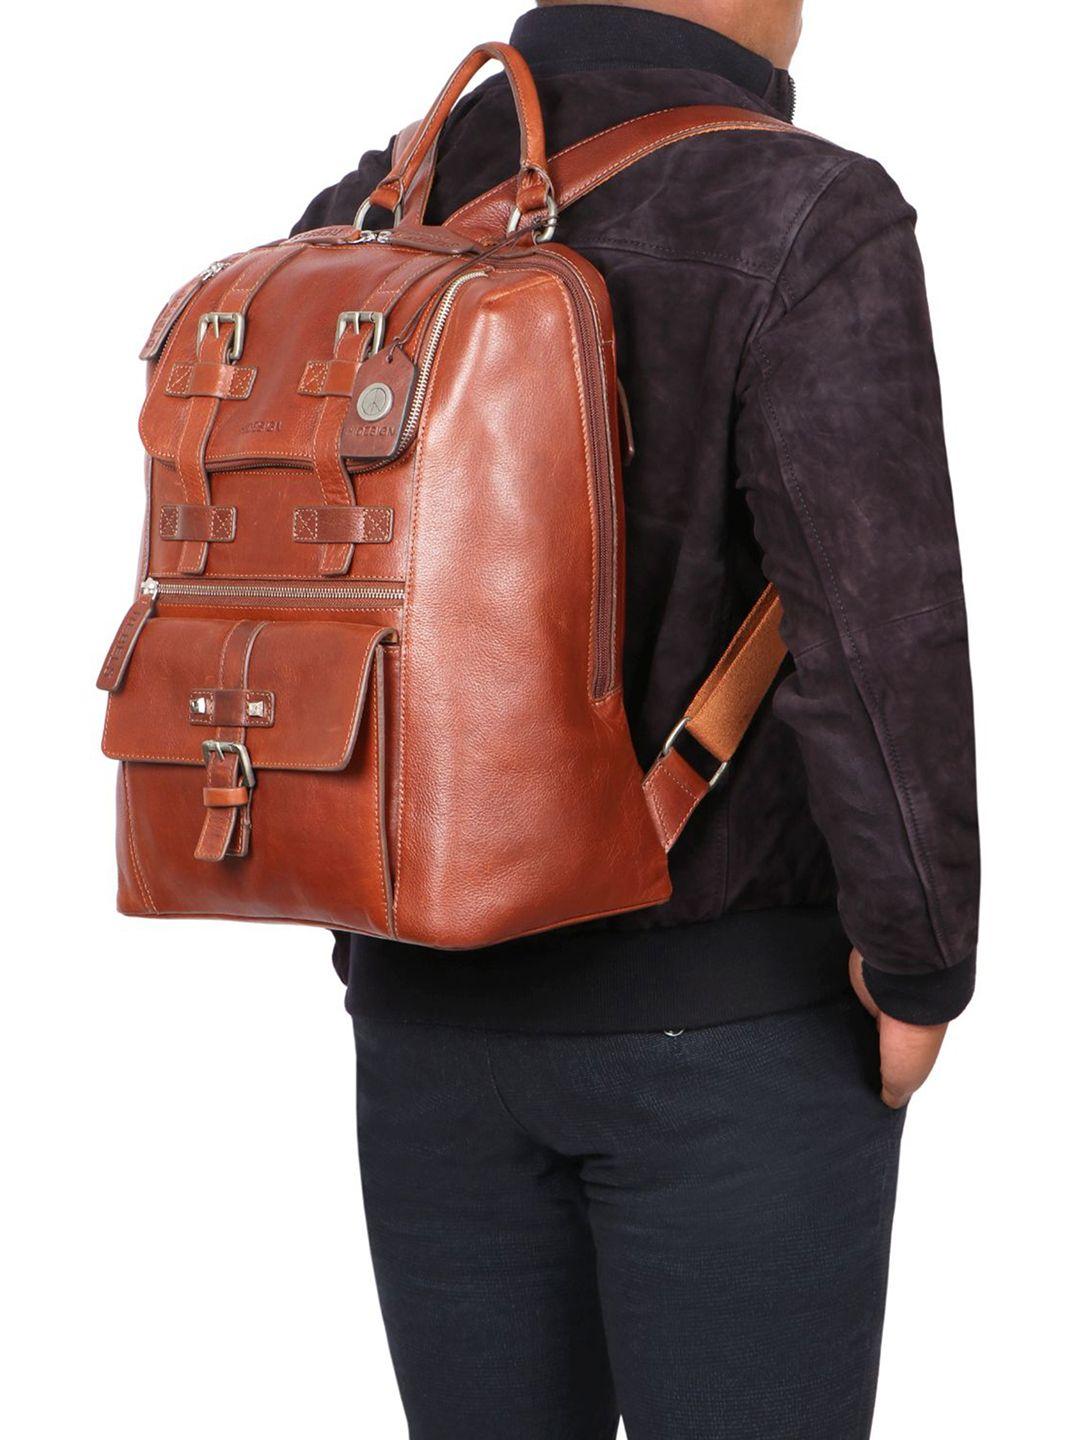 hidesign ergonomic leather backpack